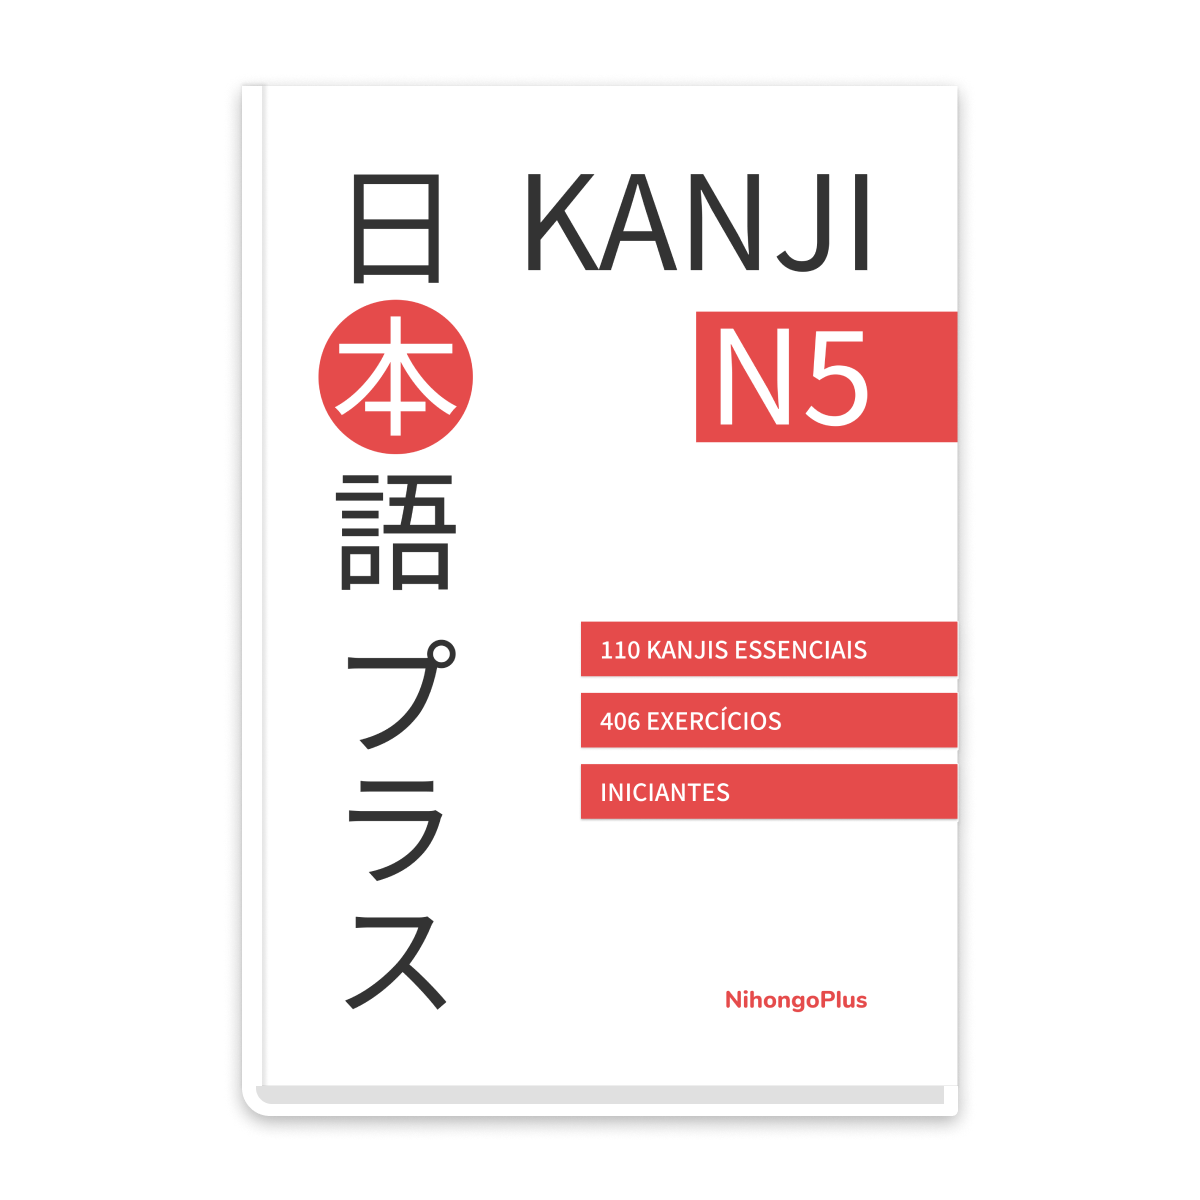 ebook kanji n5 usado para aula de japonês